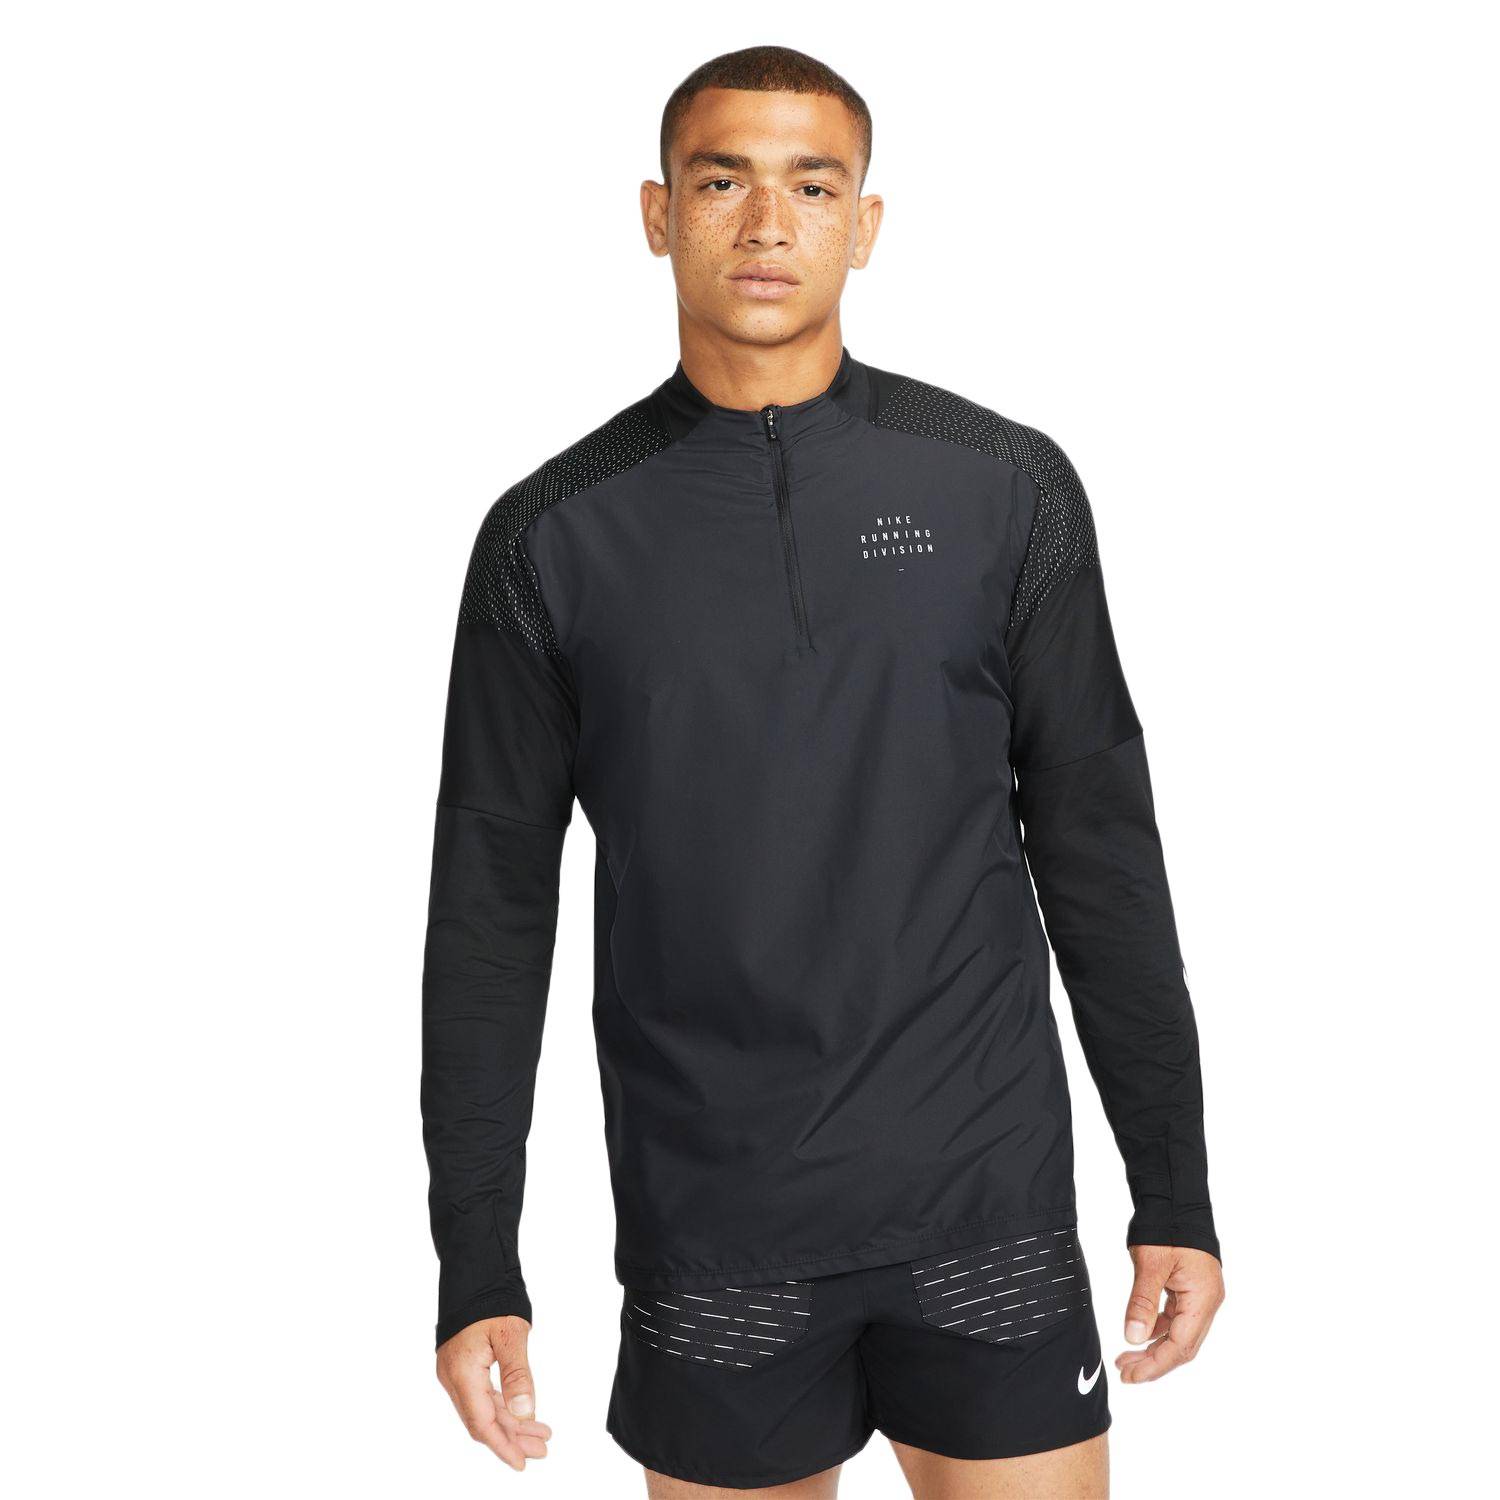 Nike Element Run Division Half Zip Men's Running Top - Black/Ref Silver